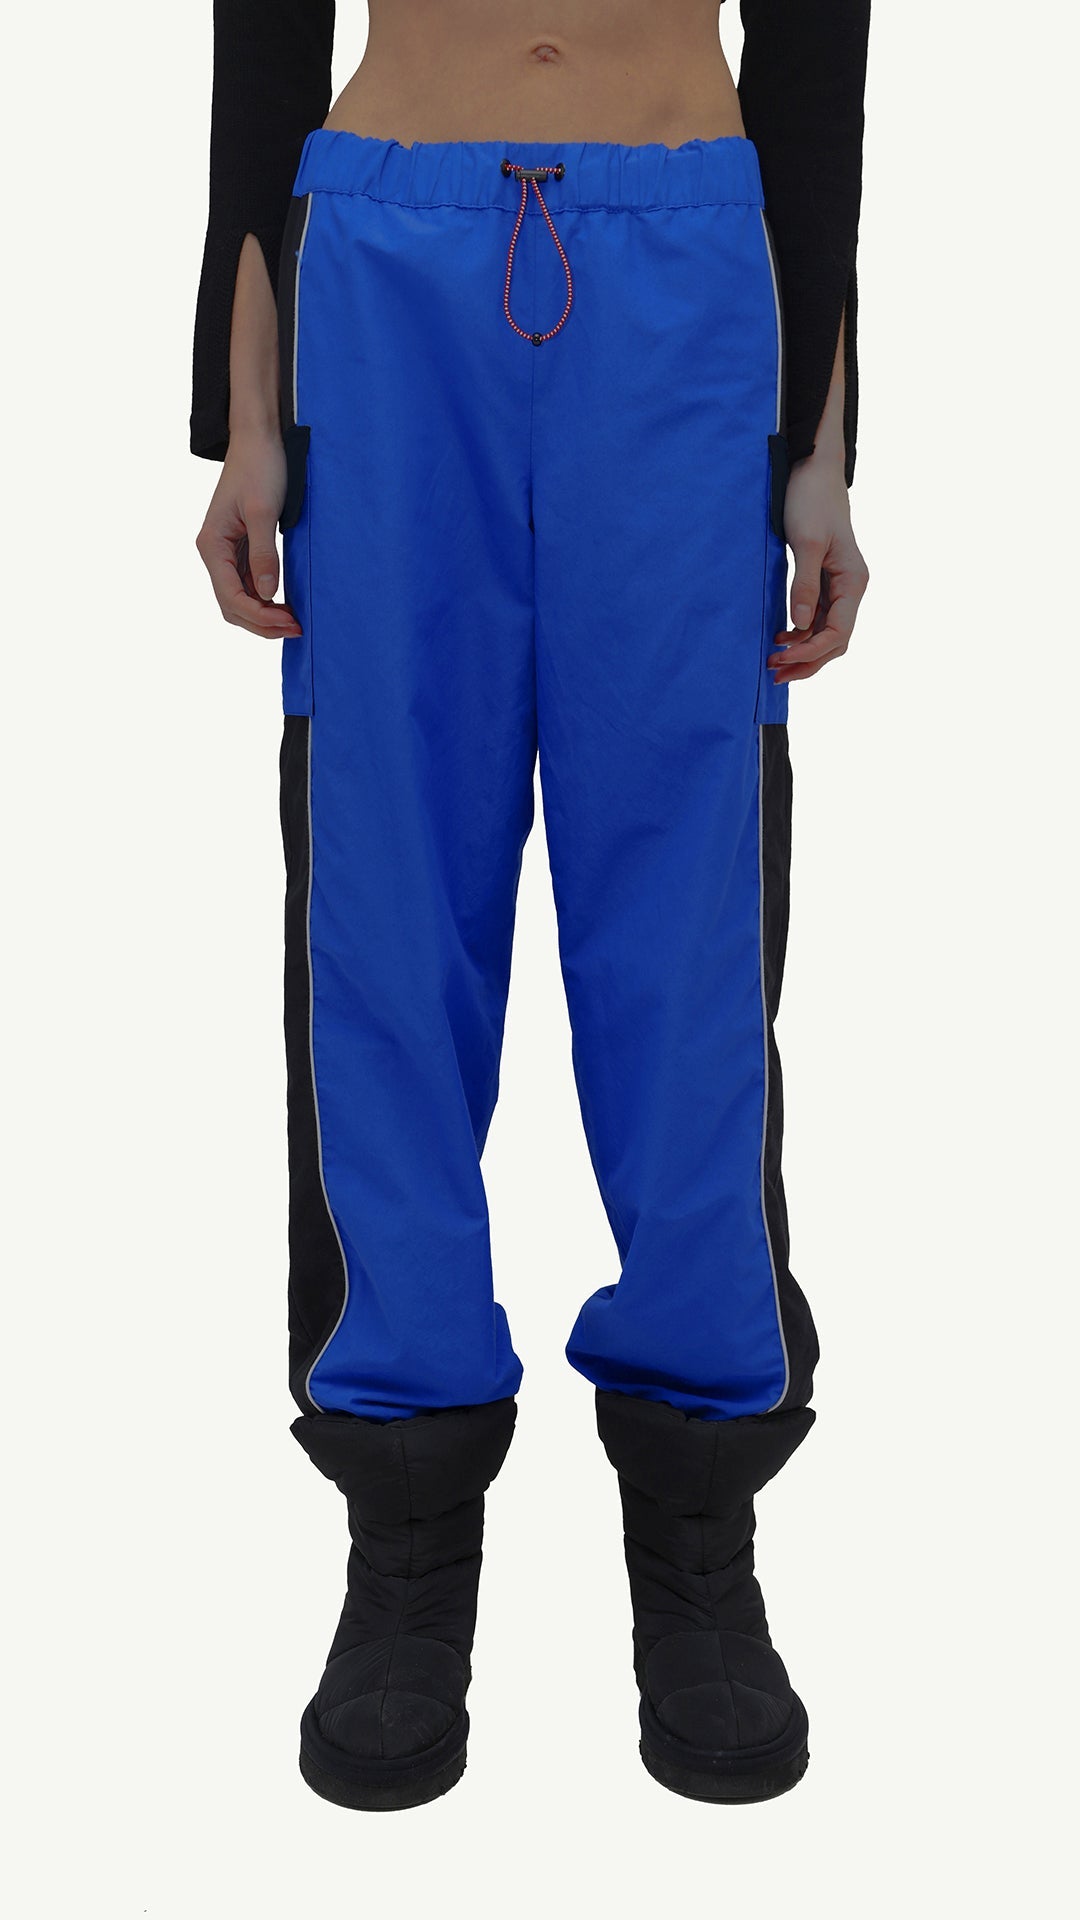 Essex Pants (Sample Product)